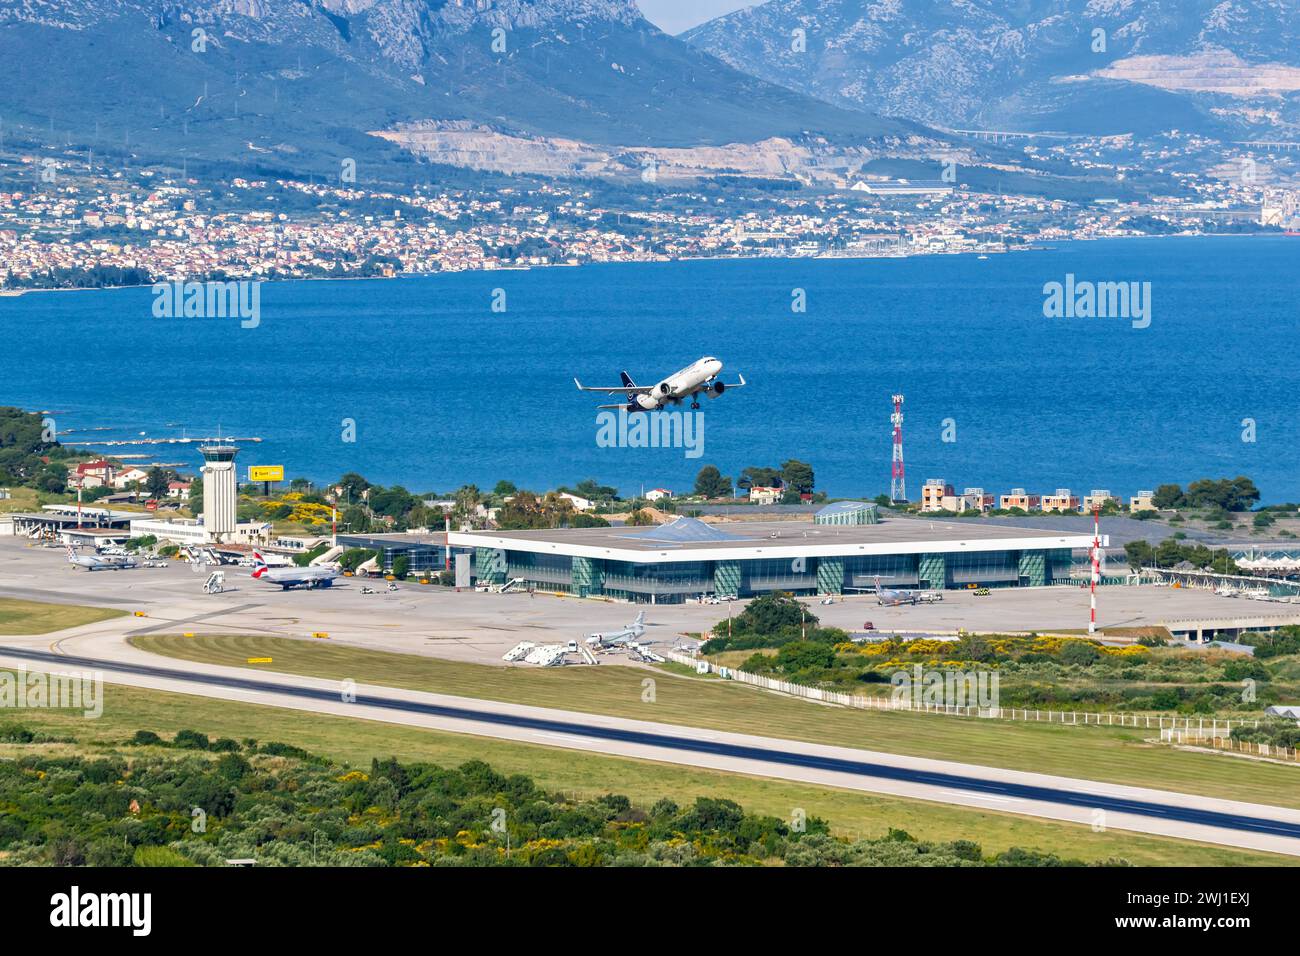 Lufthansa Airbus A320neo aircraft Split Airport in Croatia Stock Photo